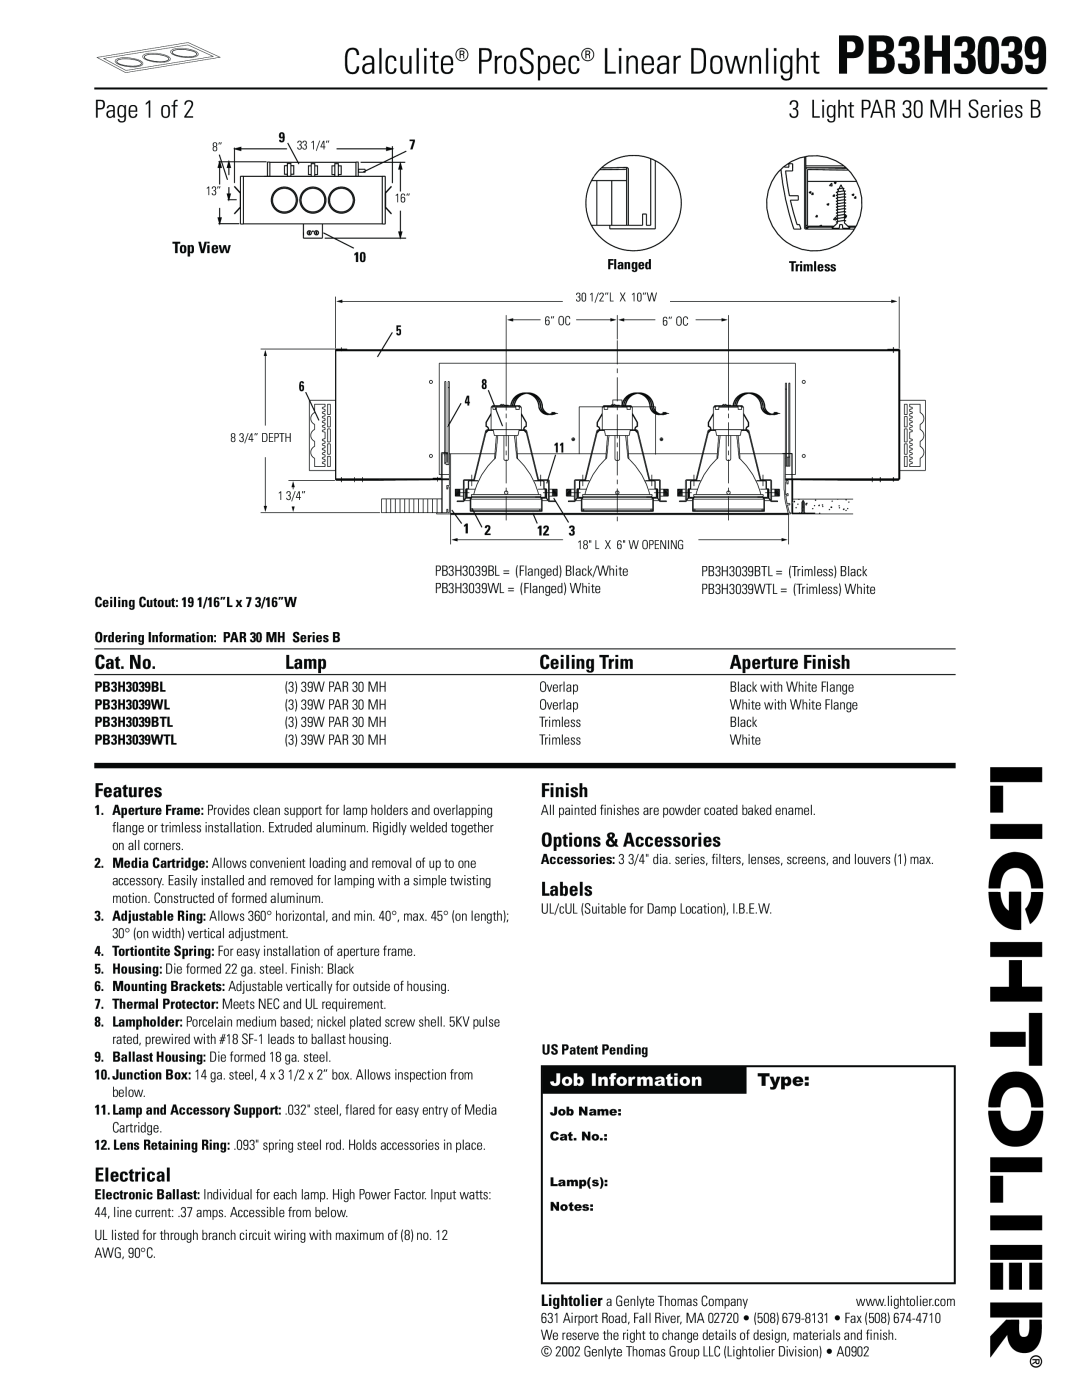 Lightolier PB3H3039 manual Page 1 of, Light PAR 30 MH Series B, Cat. No, Lamp, Ceiling Trim, Aperture Finish, Features 